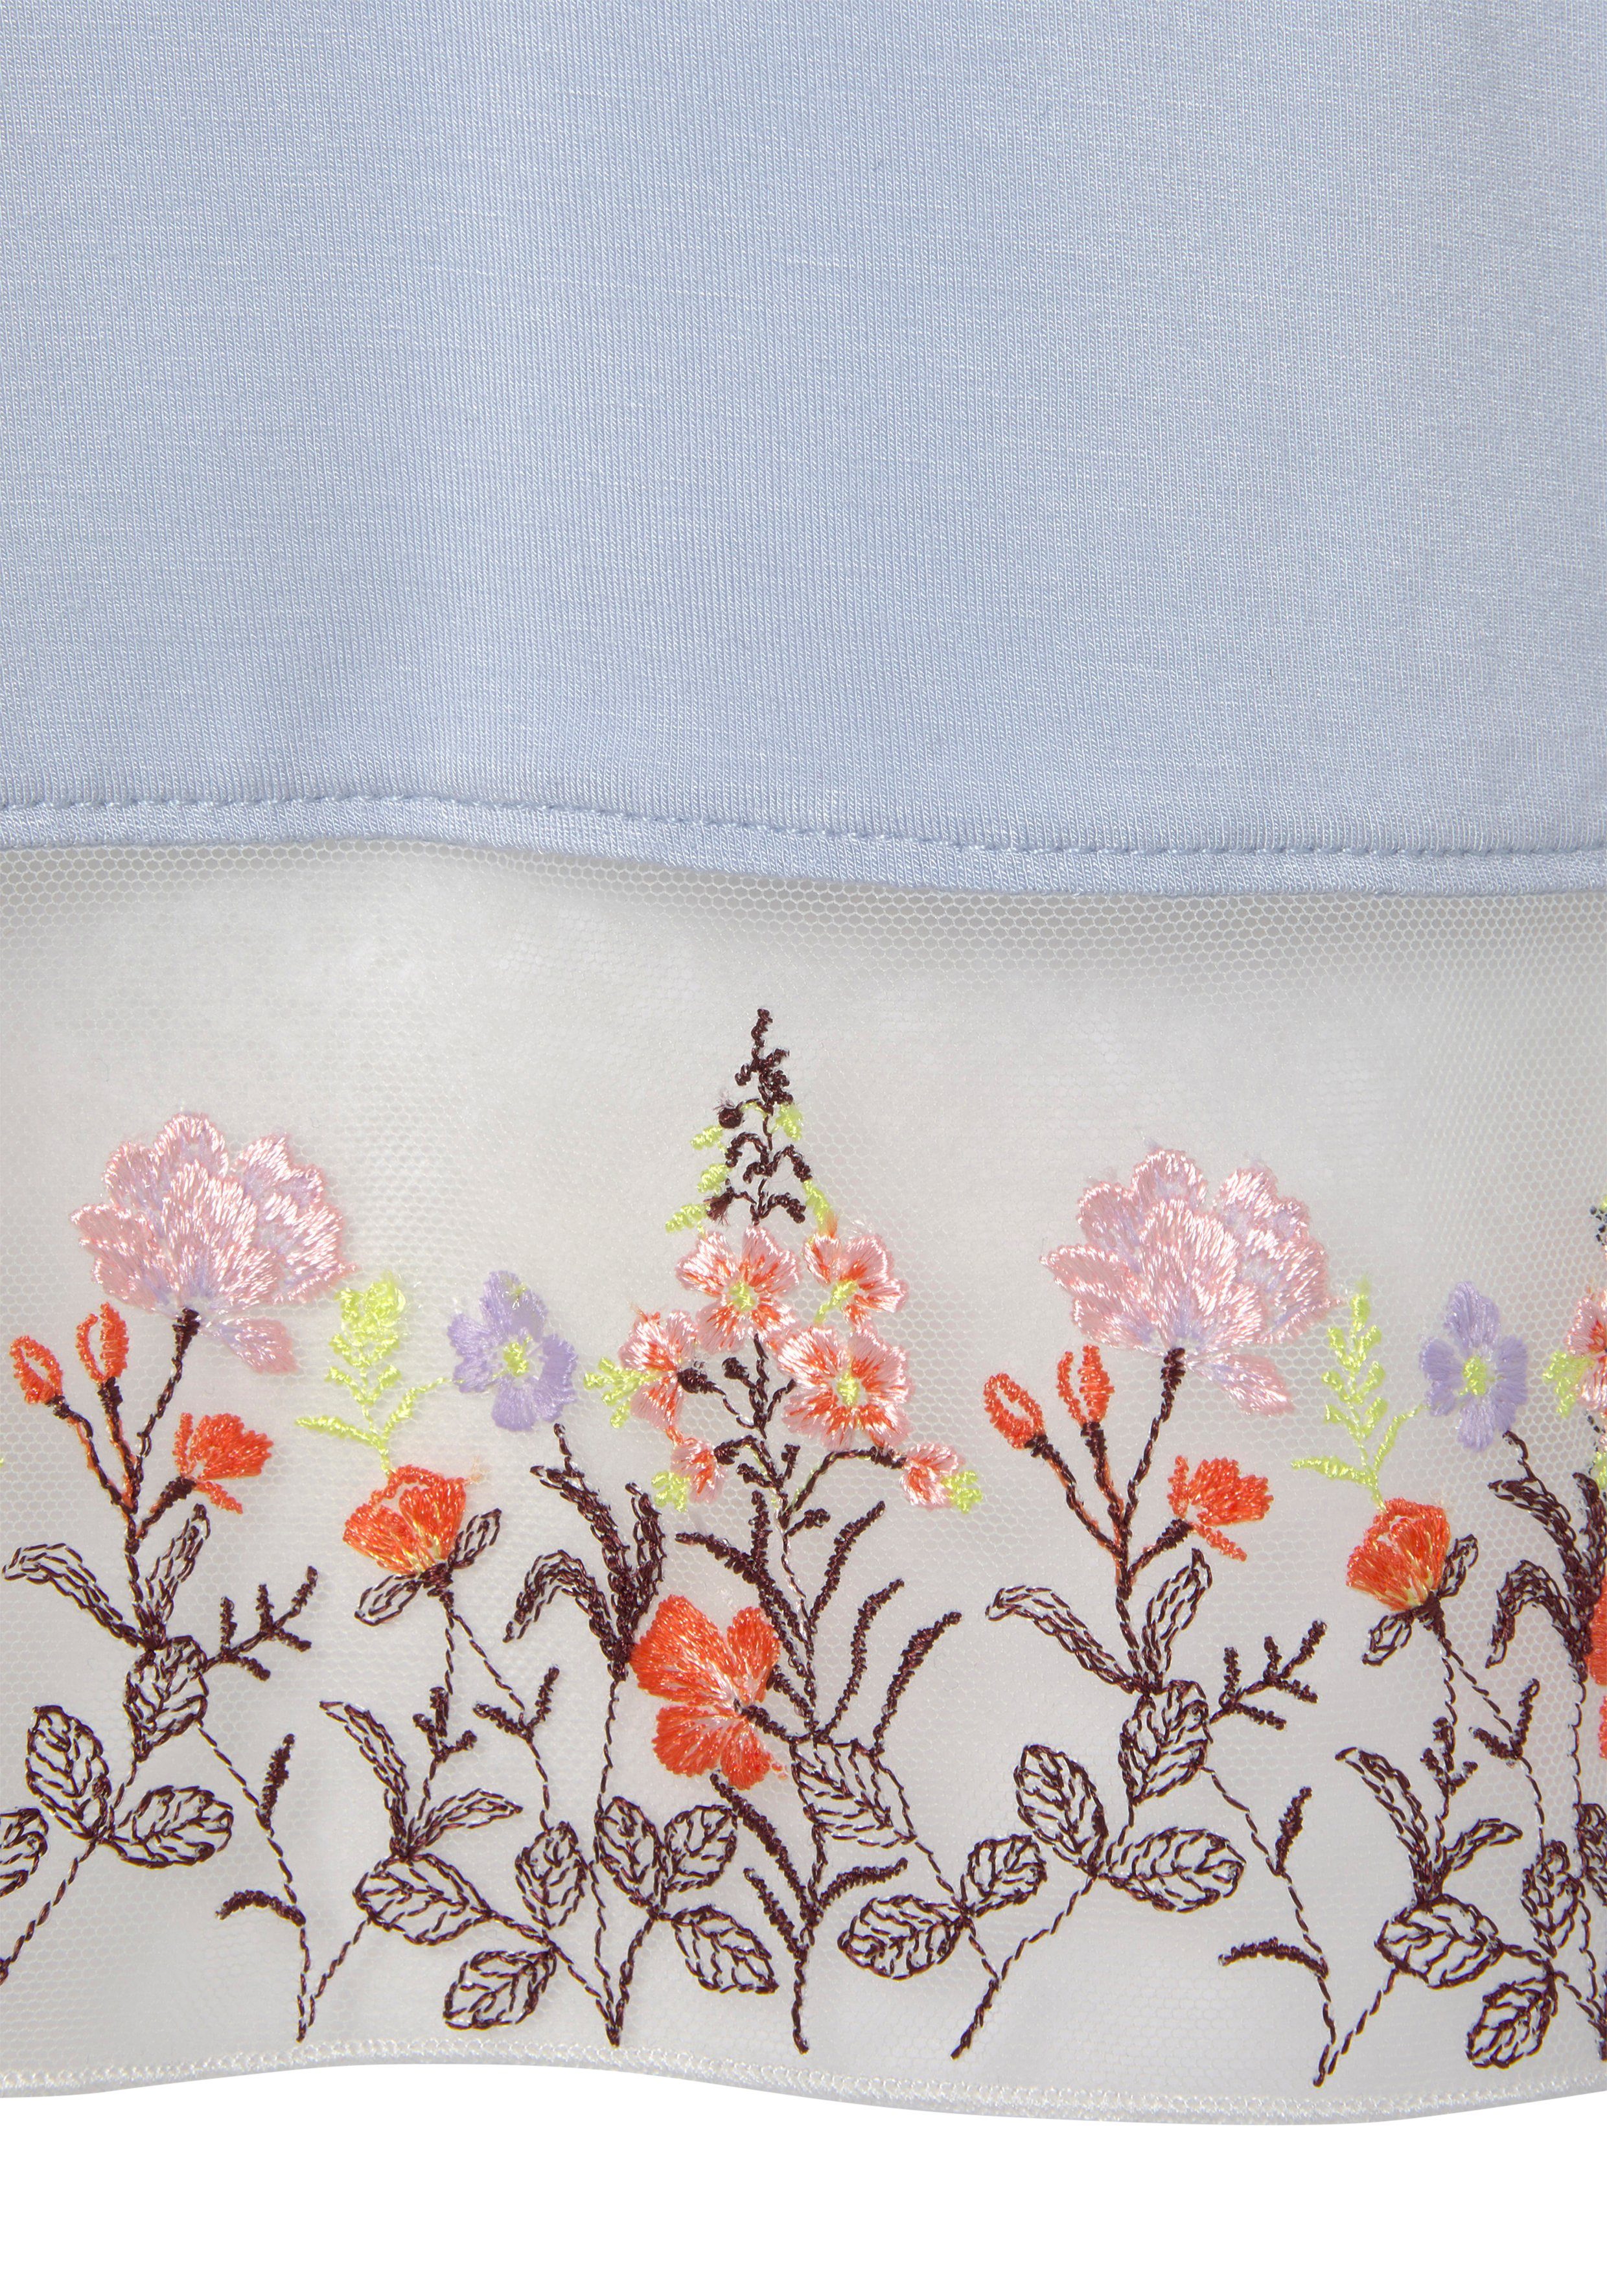 LASCANA Kimono, Kurzform, Kimono-Kragen, Spitze Gürtel, mit Viskose, Hellblau bestickter